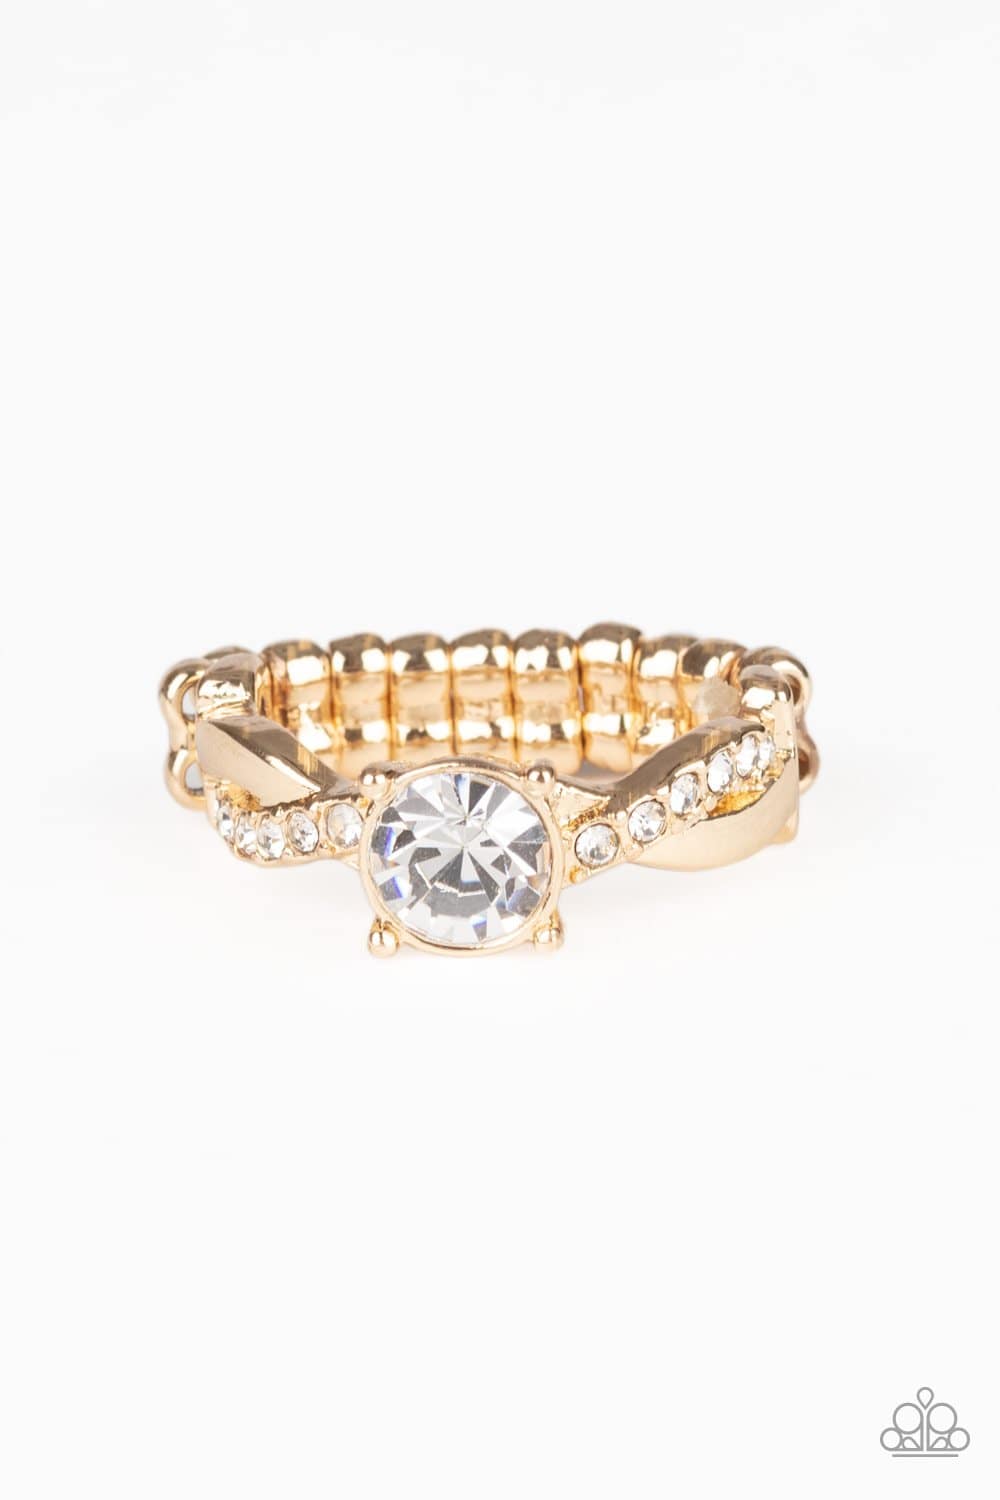 Paparazzi Prim and Proper Gold Ring with White Rhinestones